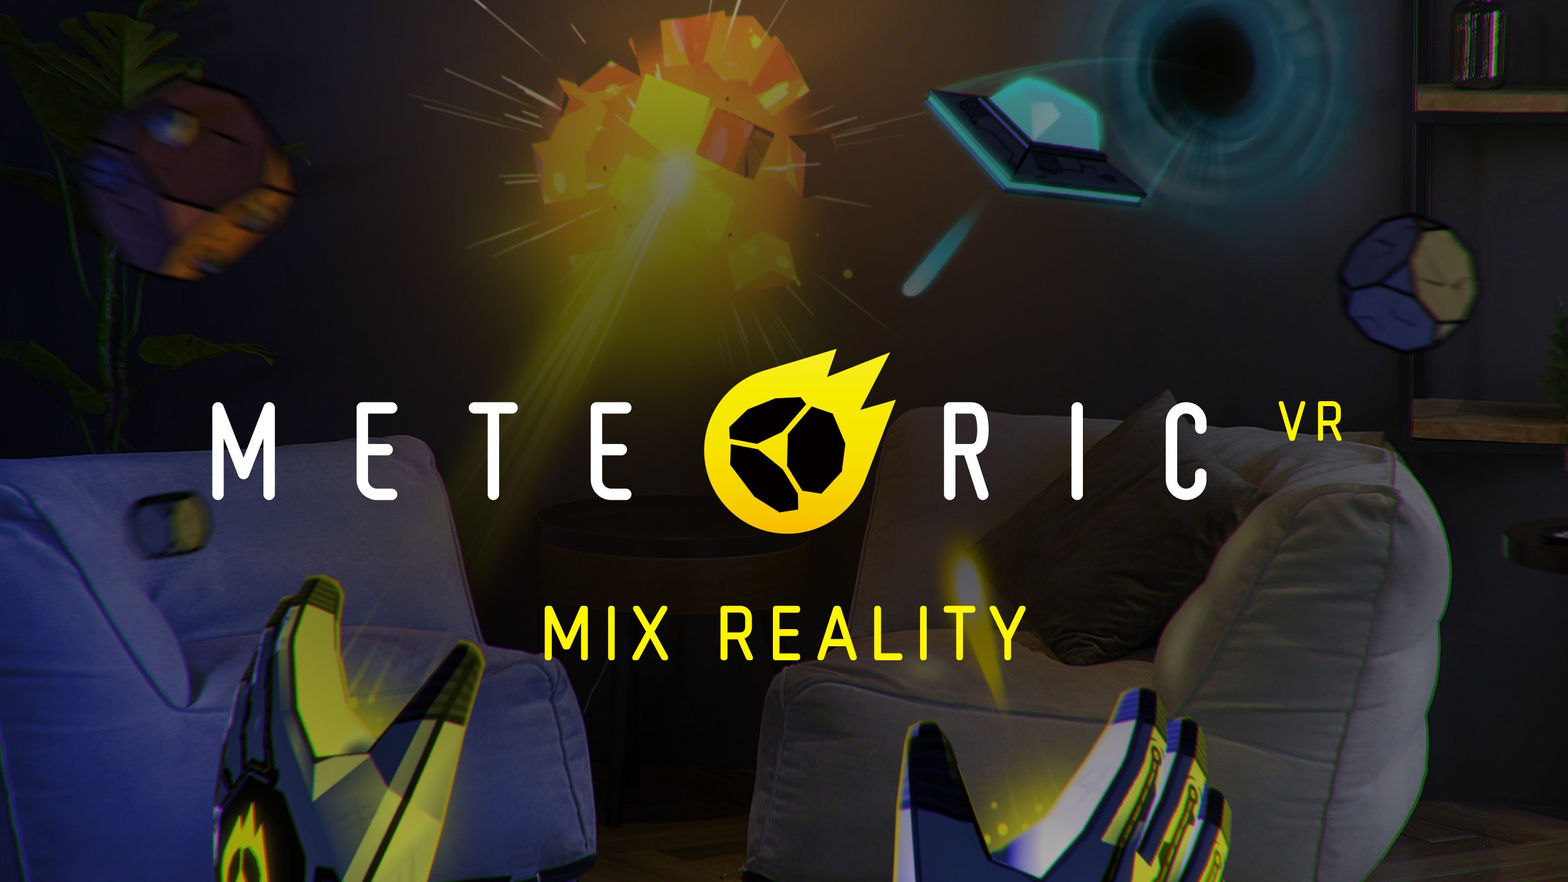 Meteoric VR